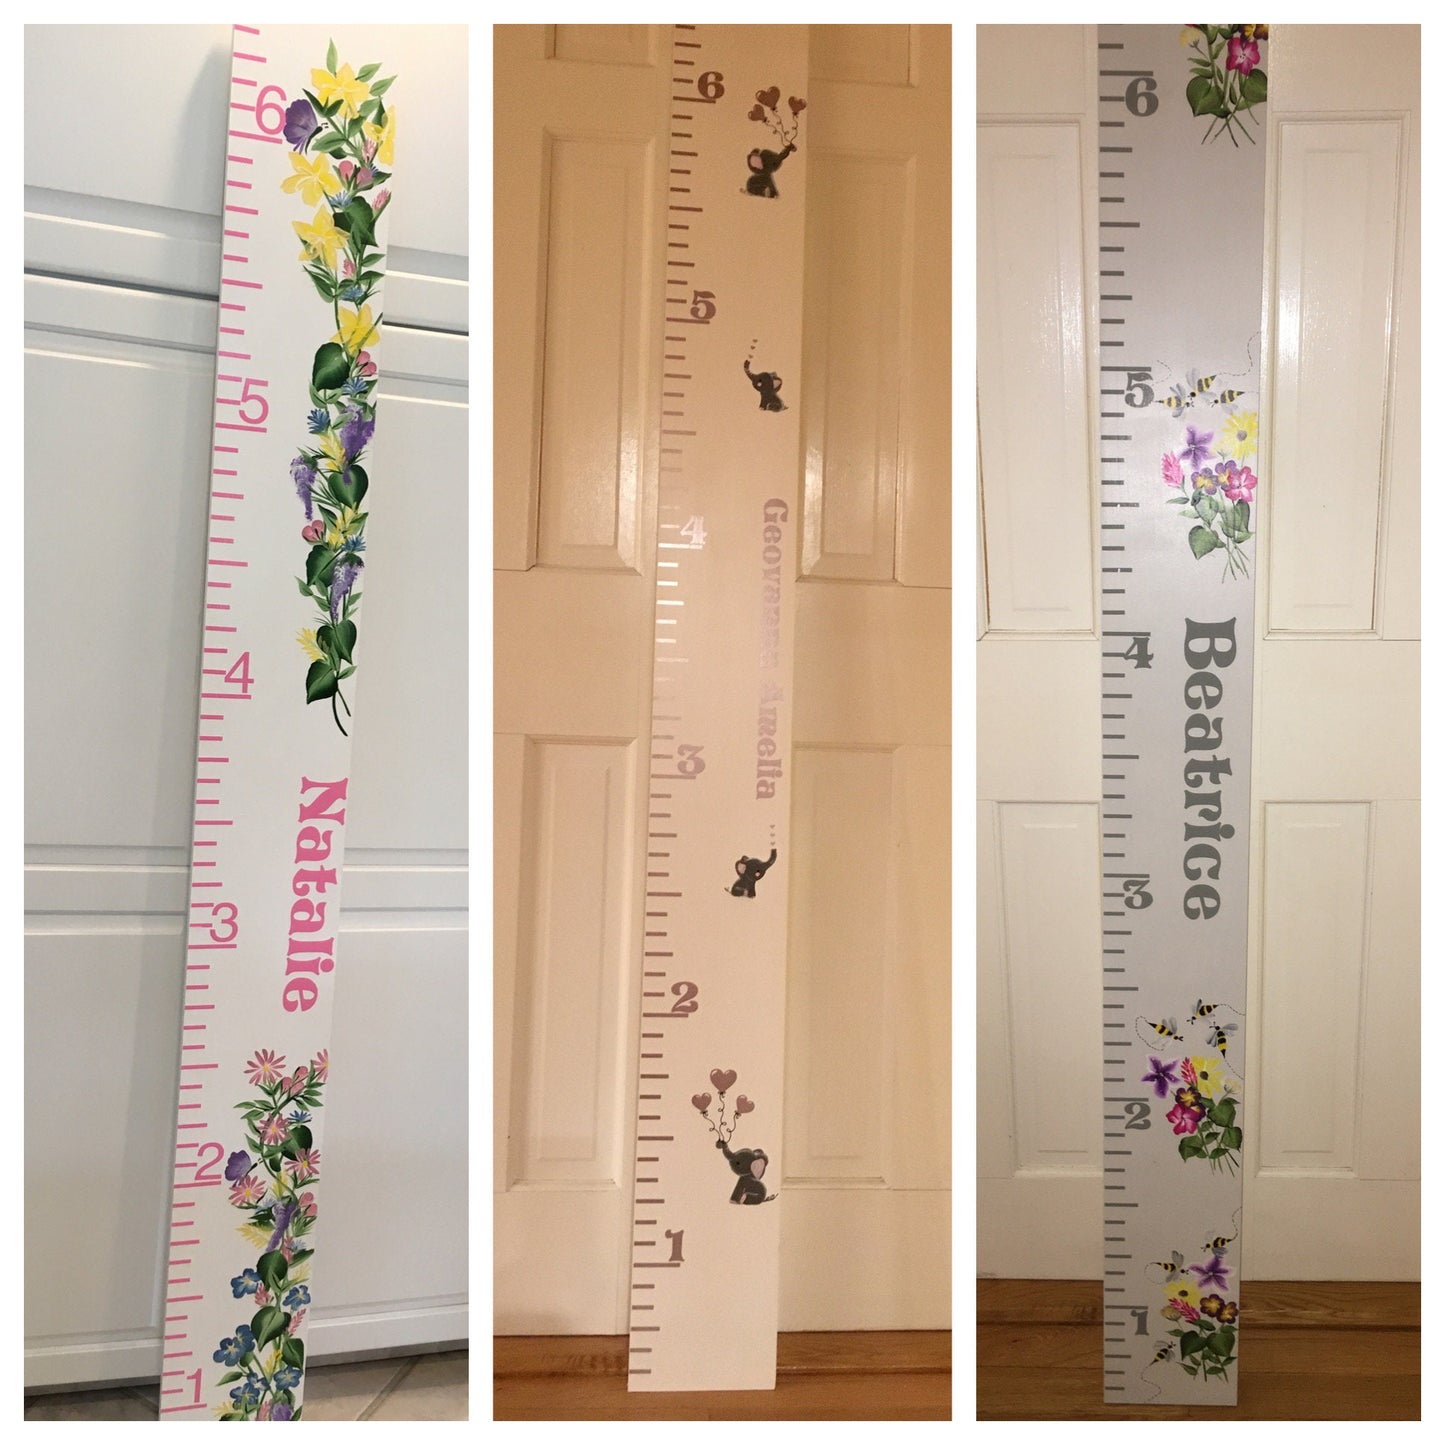 Growth Chart Ruler Child's Personalized Keepsake Nursery Decor Perfect kid's gift